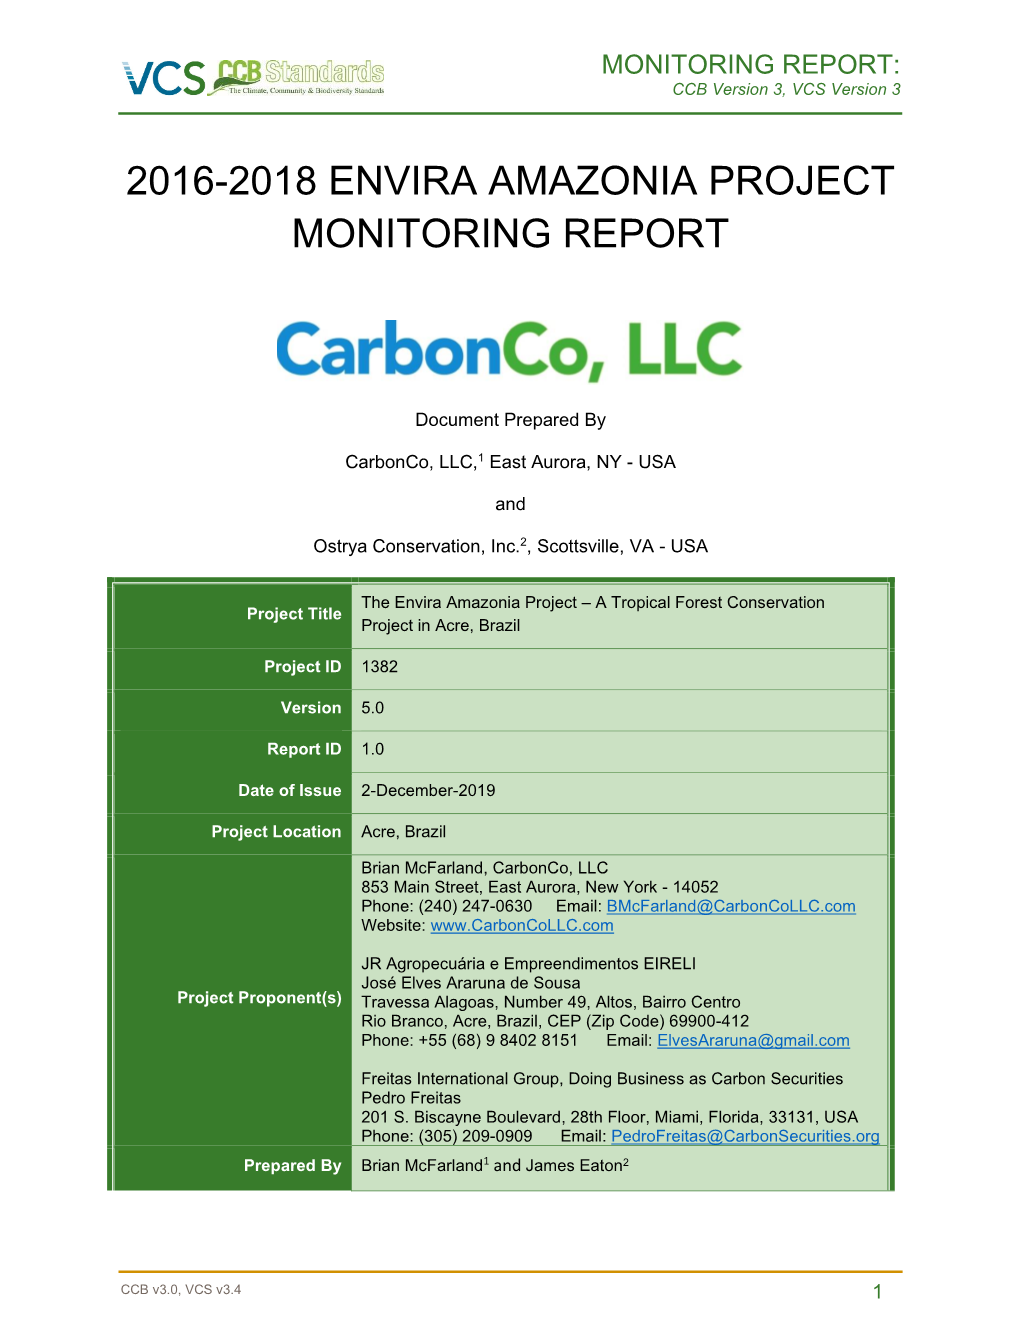 2016-2018 Envira Amazonia Project Monitoring Report